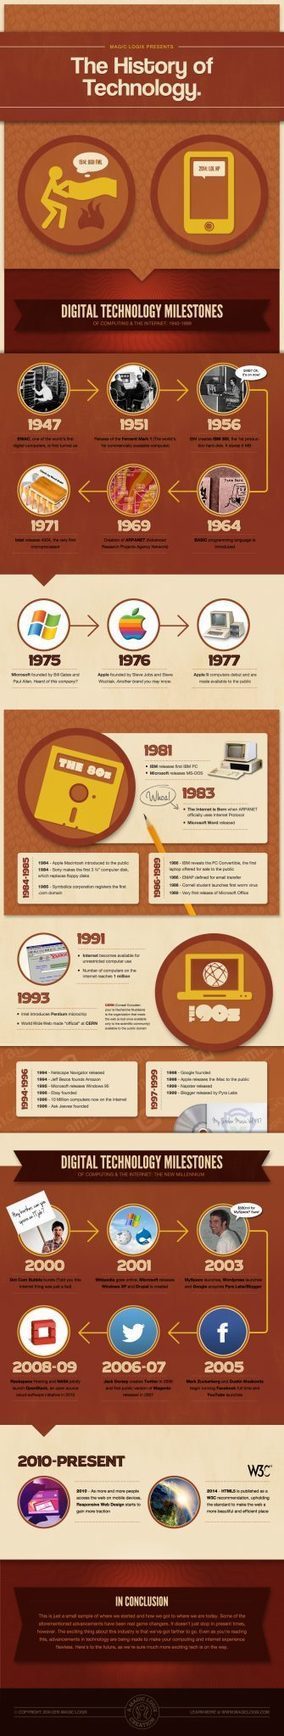 A History of Digital Technology Infographic | #TRIC para los de LETRAS | Scoop.it